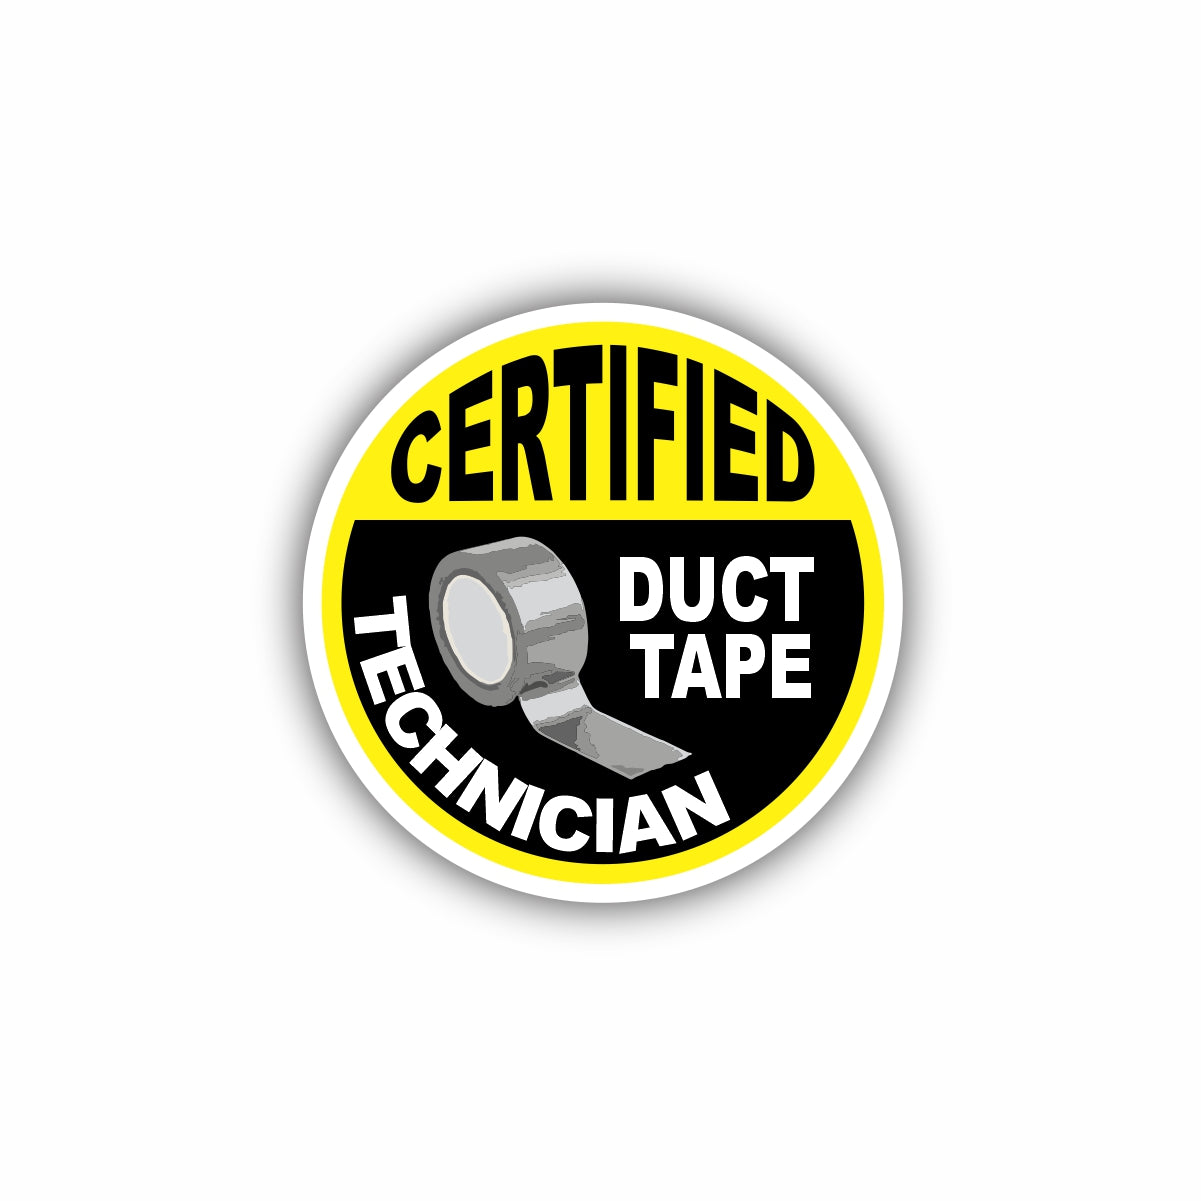 Certified Duct Tape Technician Sticker Decal